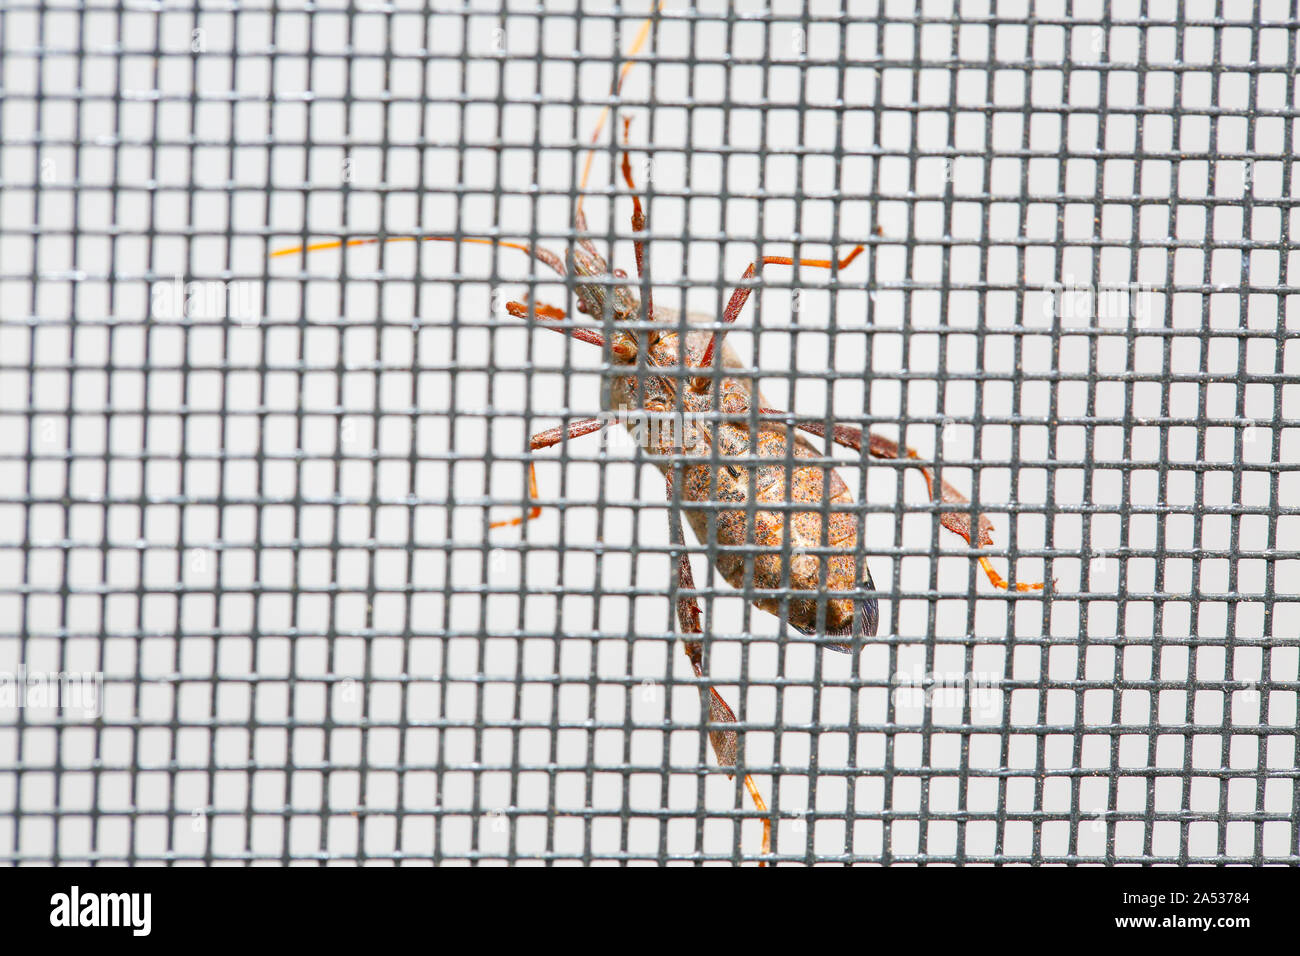 Beetle on the mesh screen closeup - Image Stock Photo